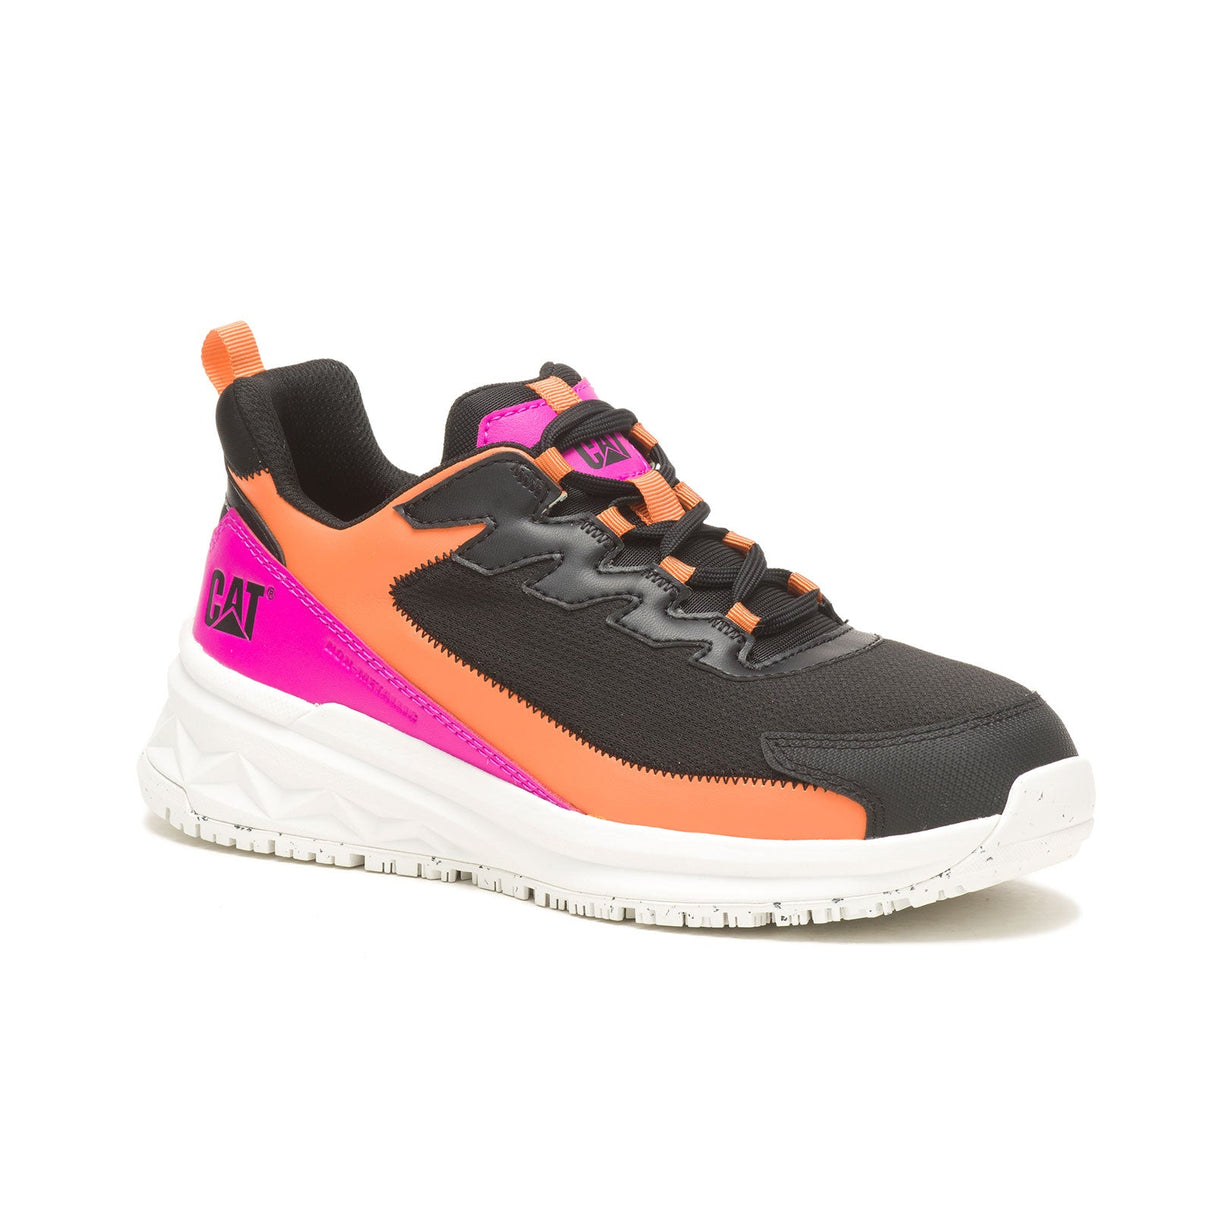 Caterpillar Streamline Runner Women's Composite-Toe Work Shoes P91495-2